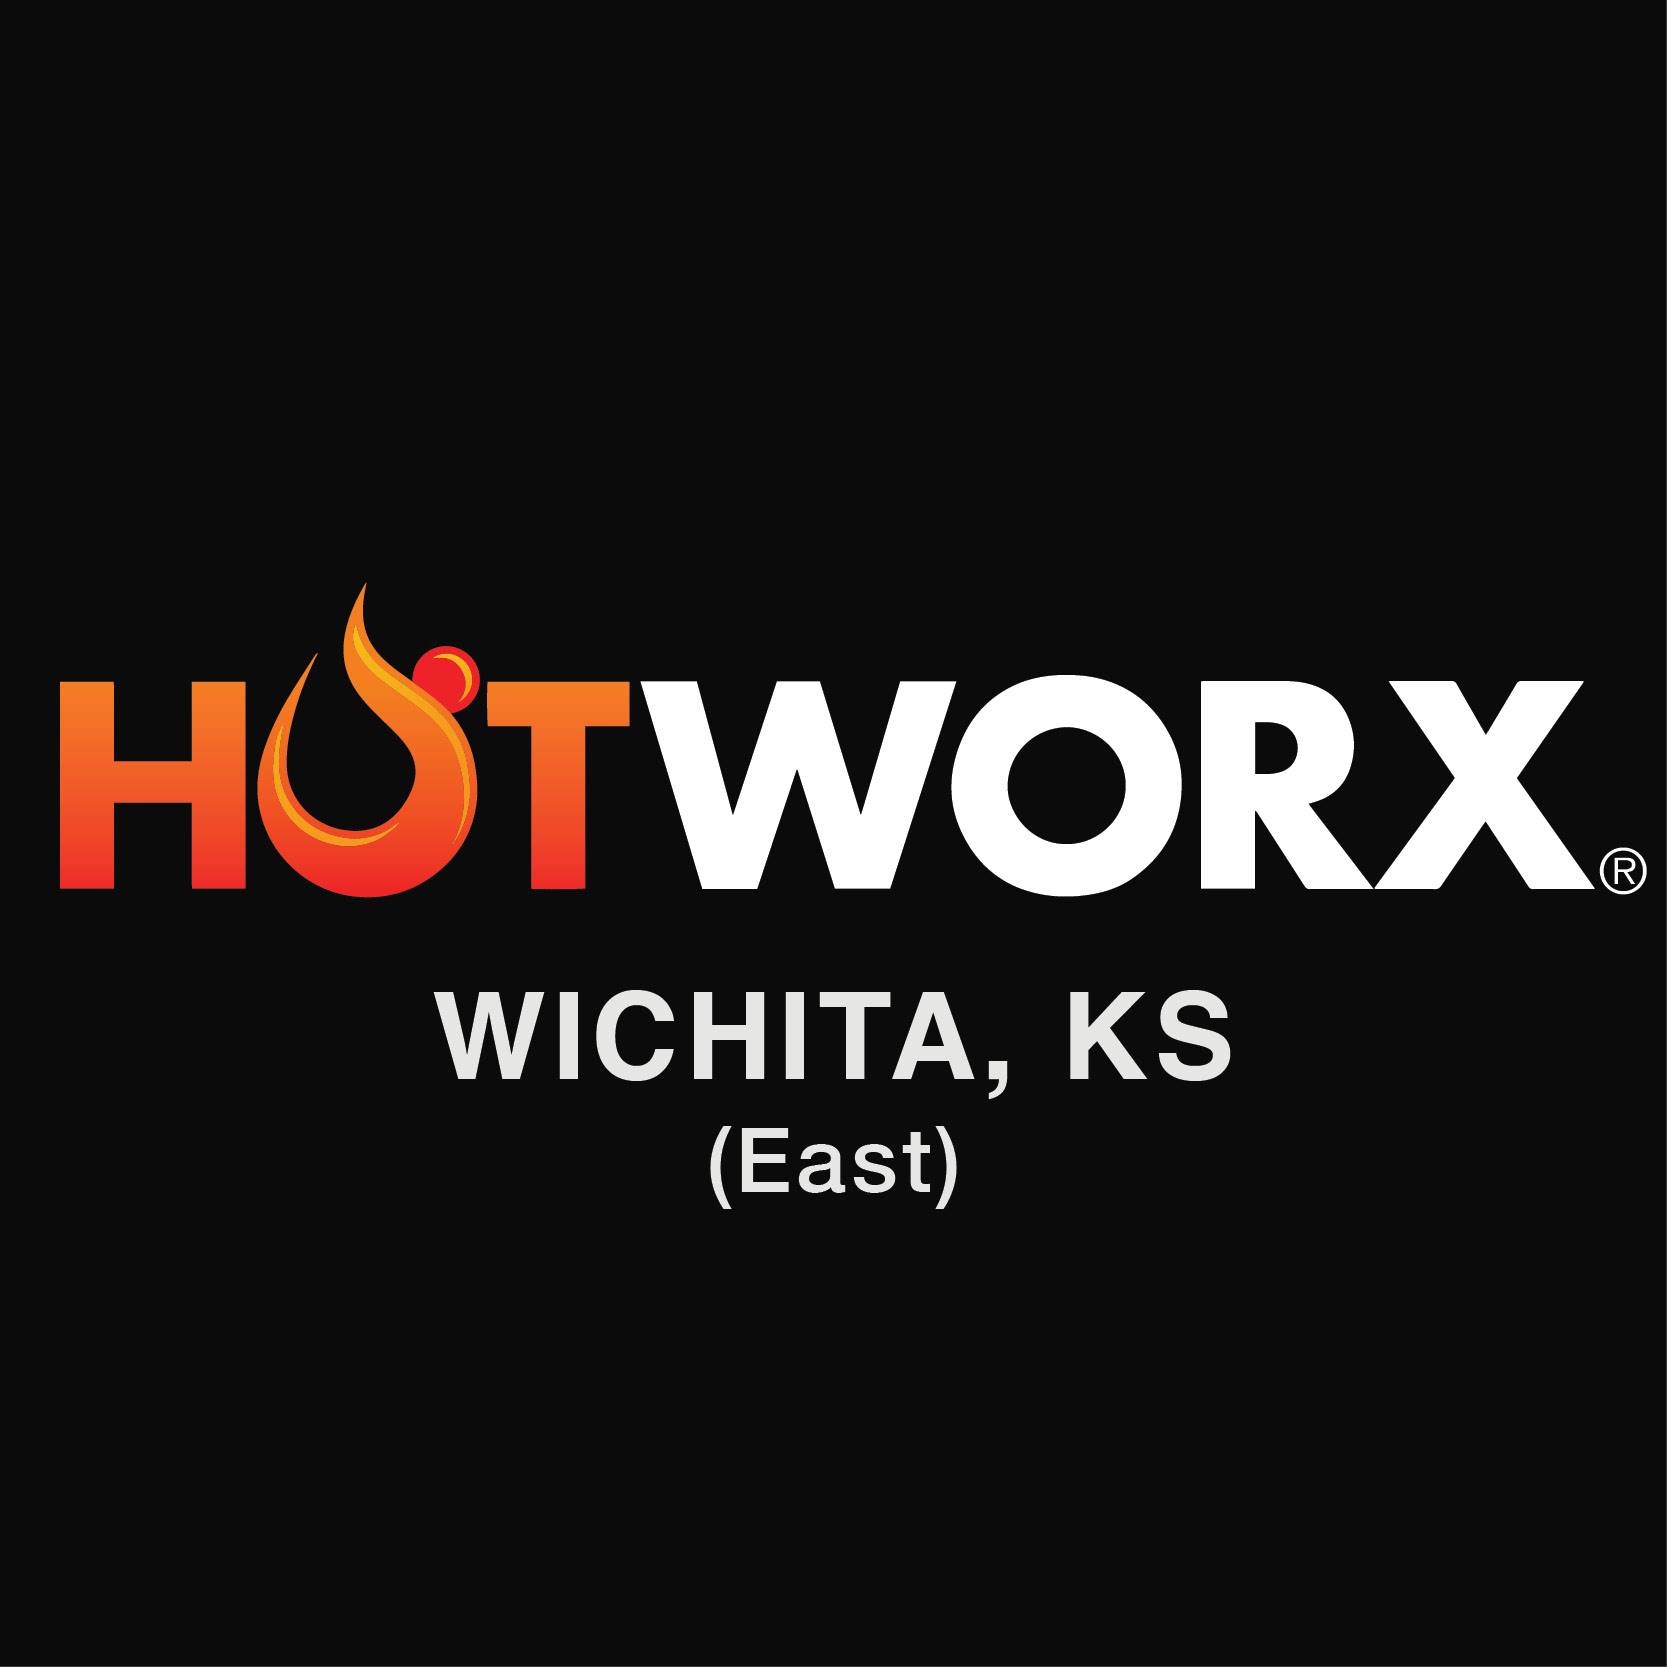 HOTWORX - Wichita, KS (East)